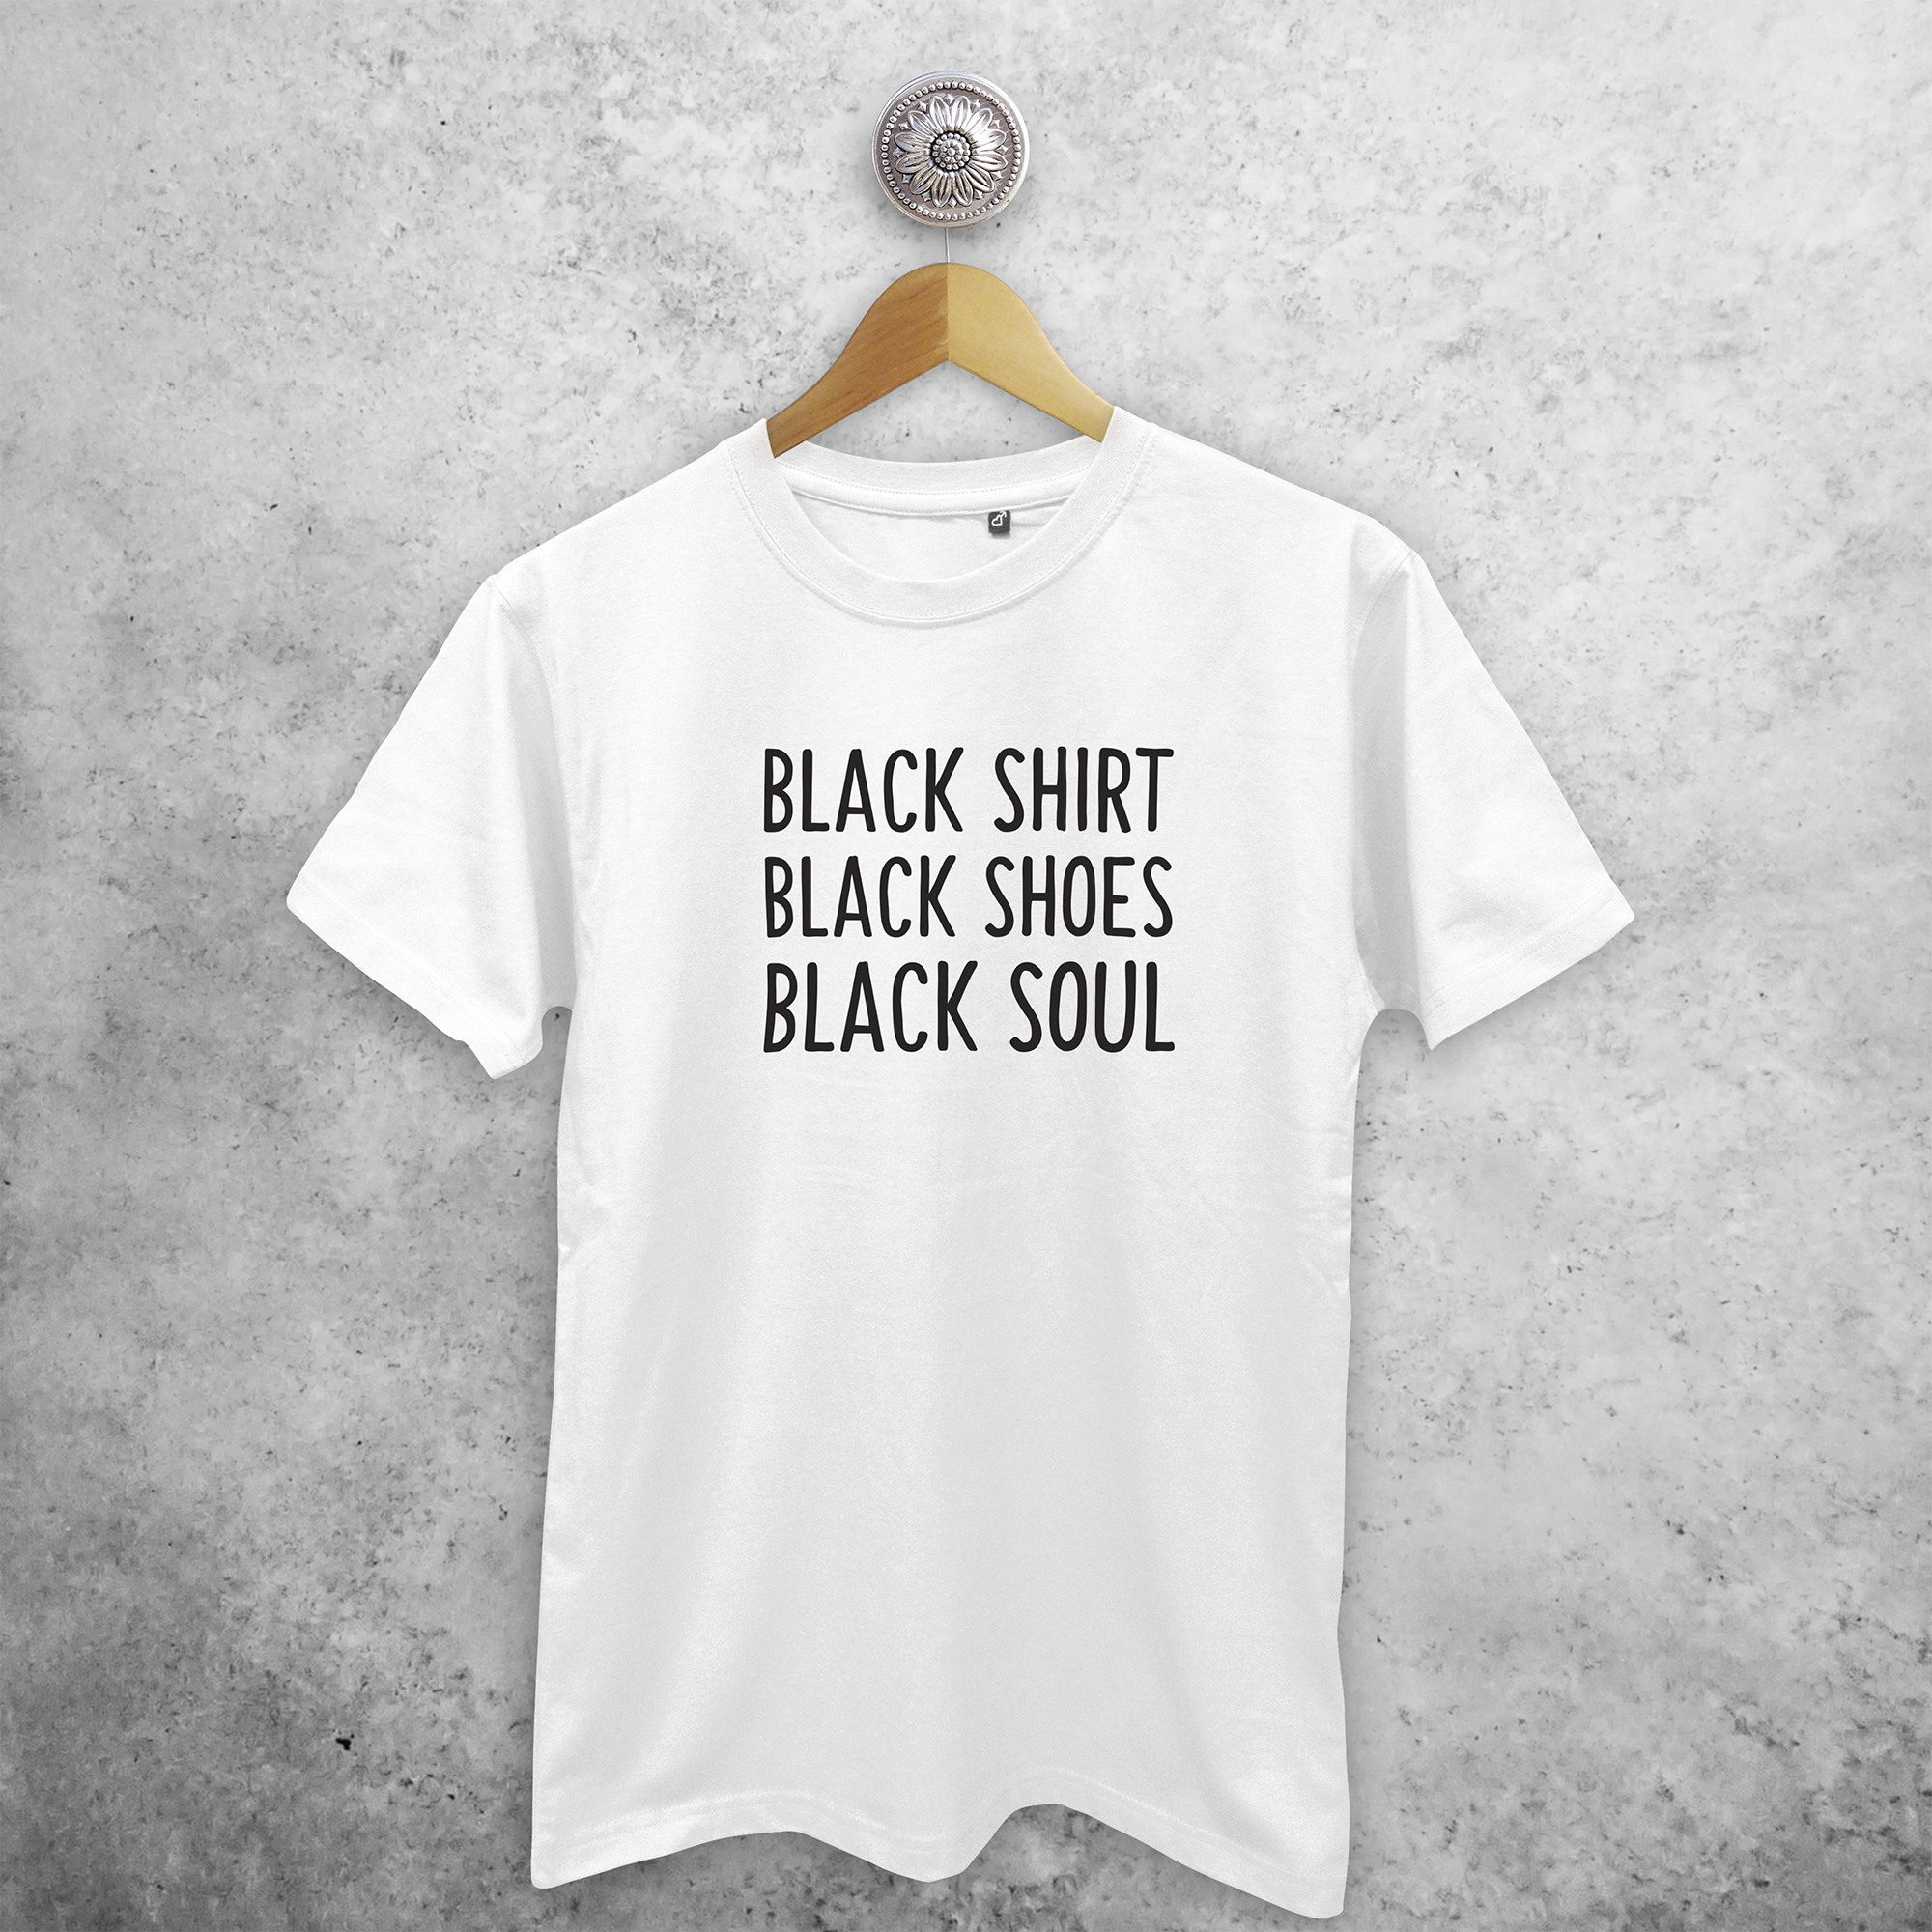 'Black shirt, Black shoes, Black soul' adult shirt